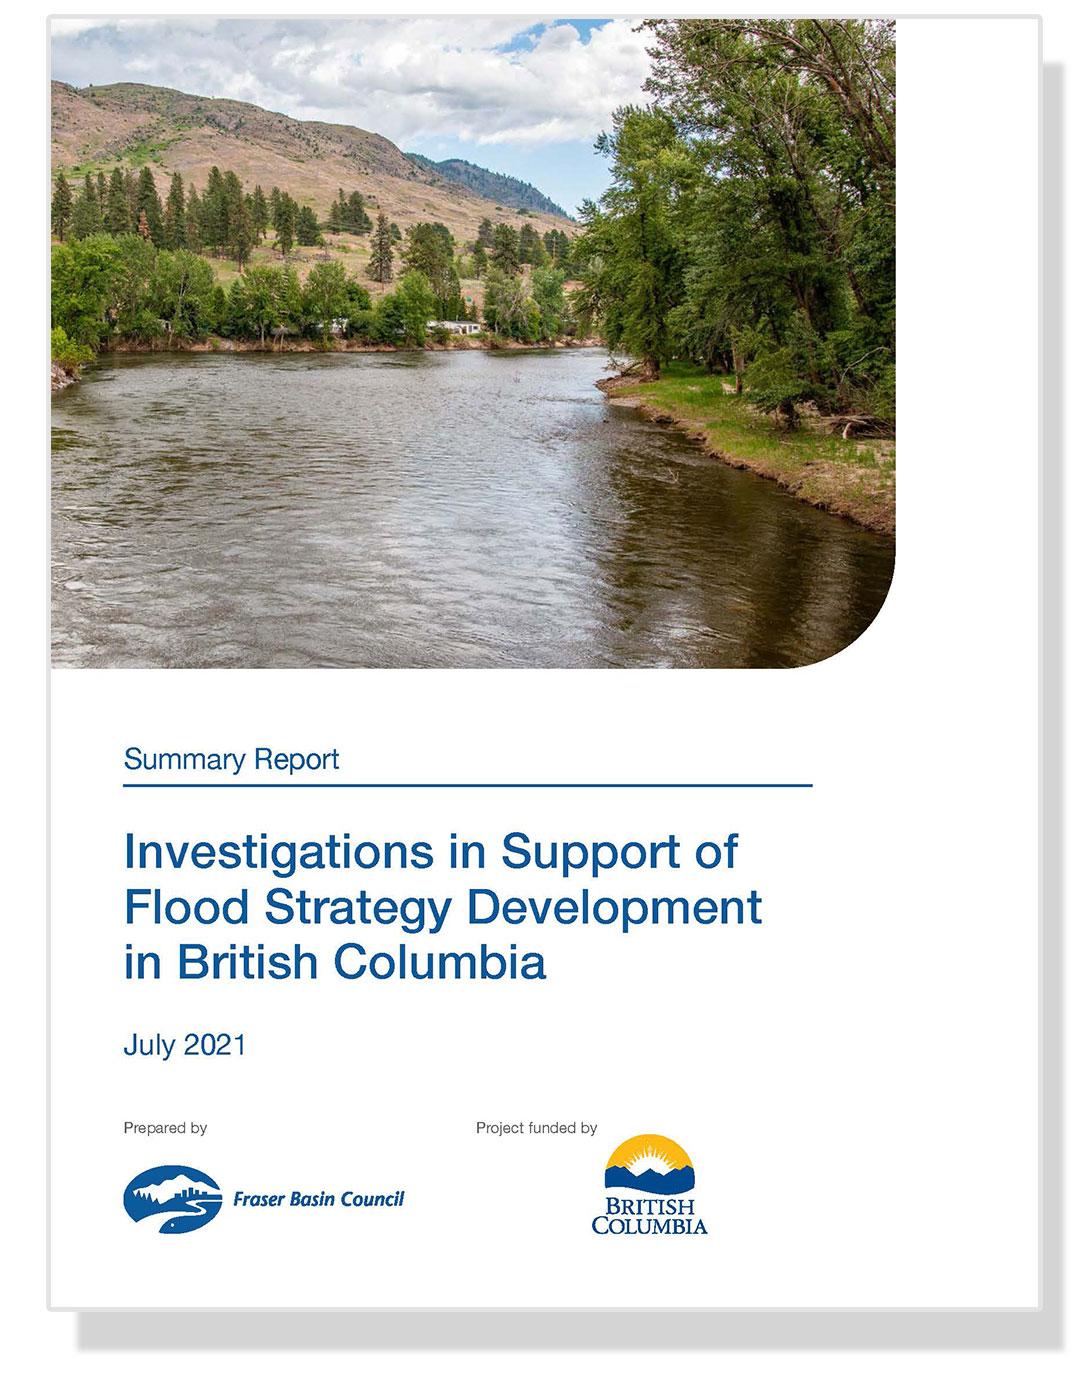 Summary Report: BC Flood Investigations